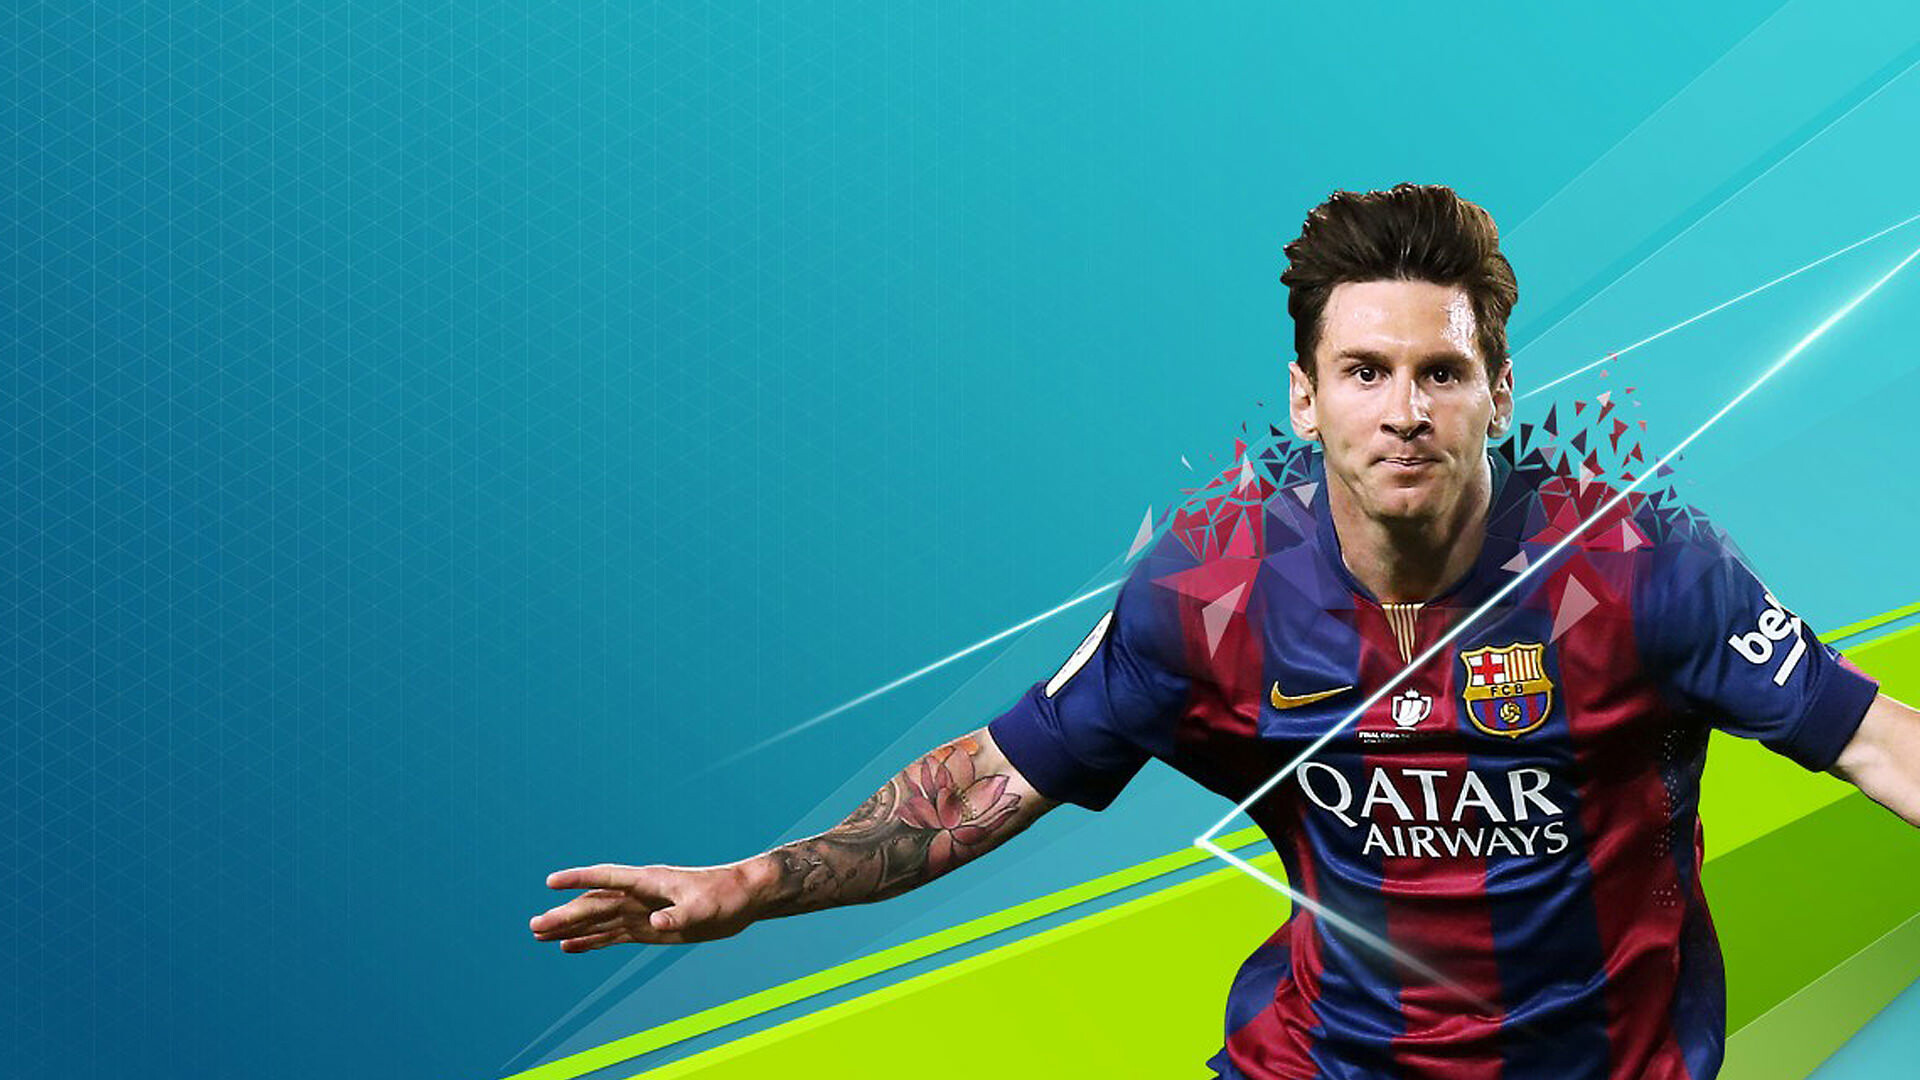 FIFA: Barcelona's Lionel Messi, Cover athlete of 16' installment. 1920x1080 Full HD Background.